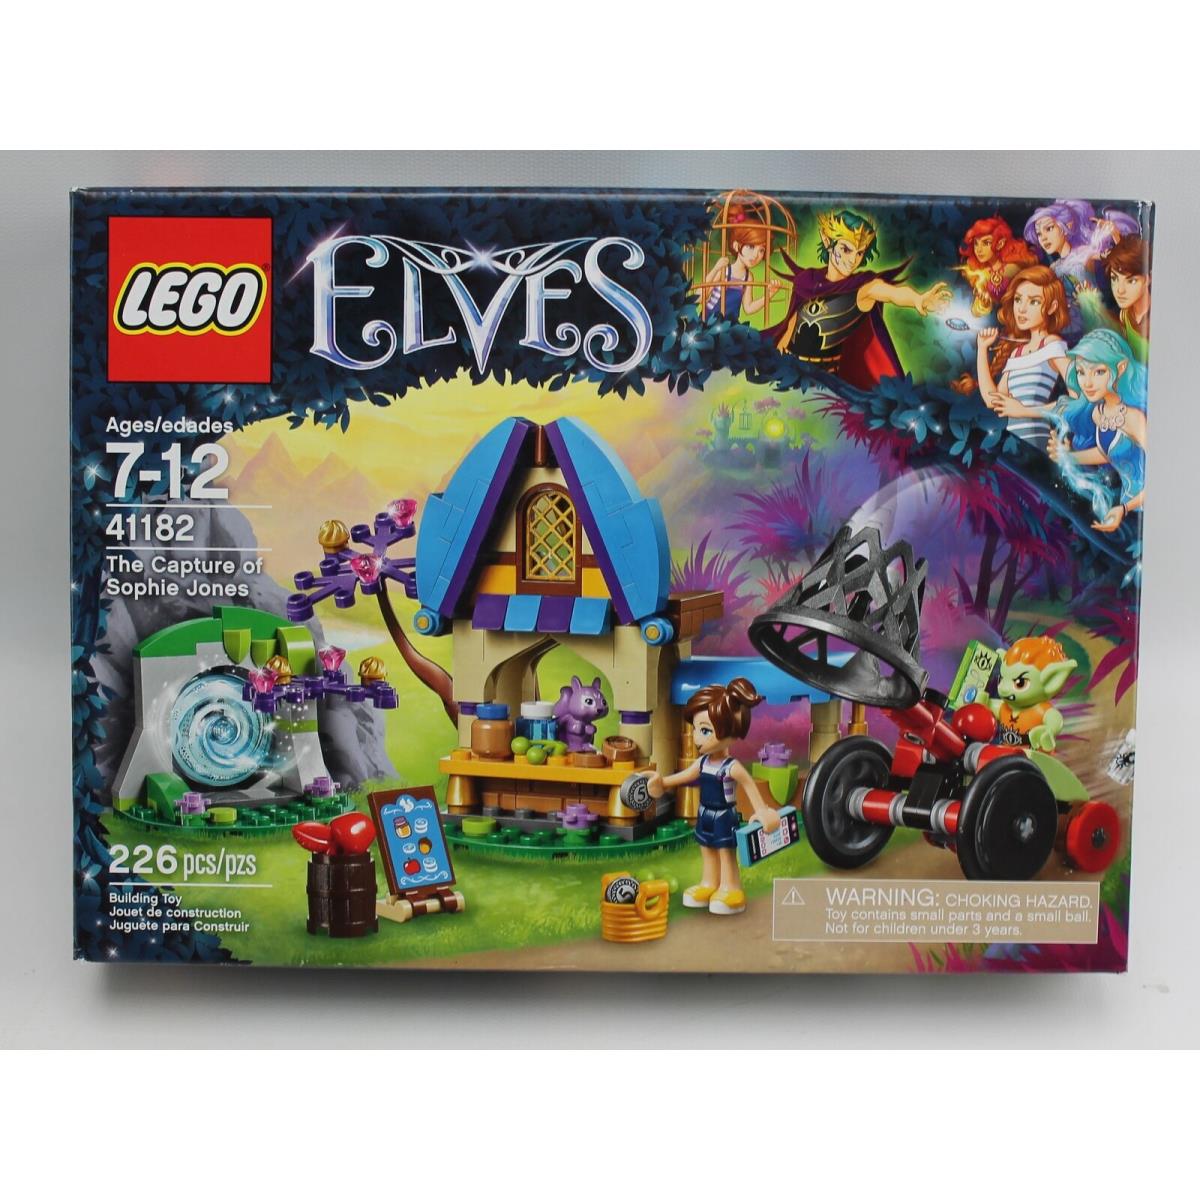 Lego Elves The Capture of Sophie Jones Set 41182